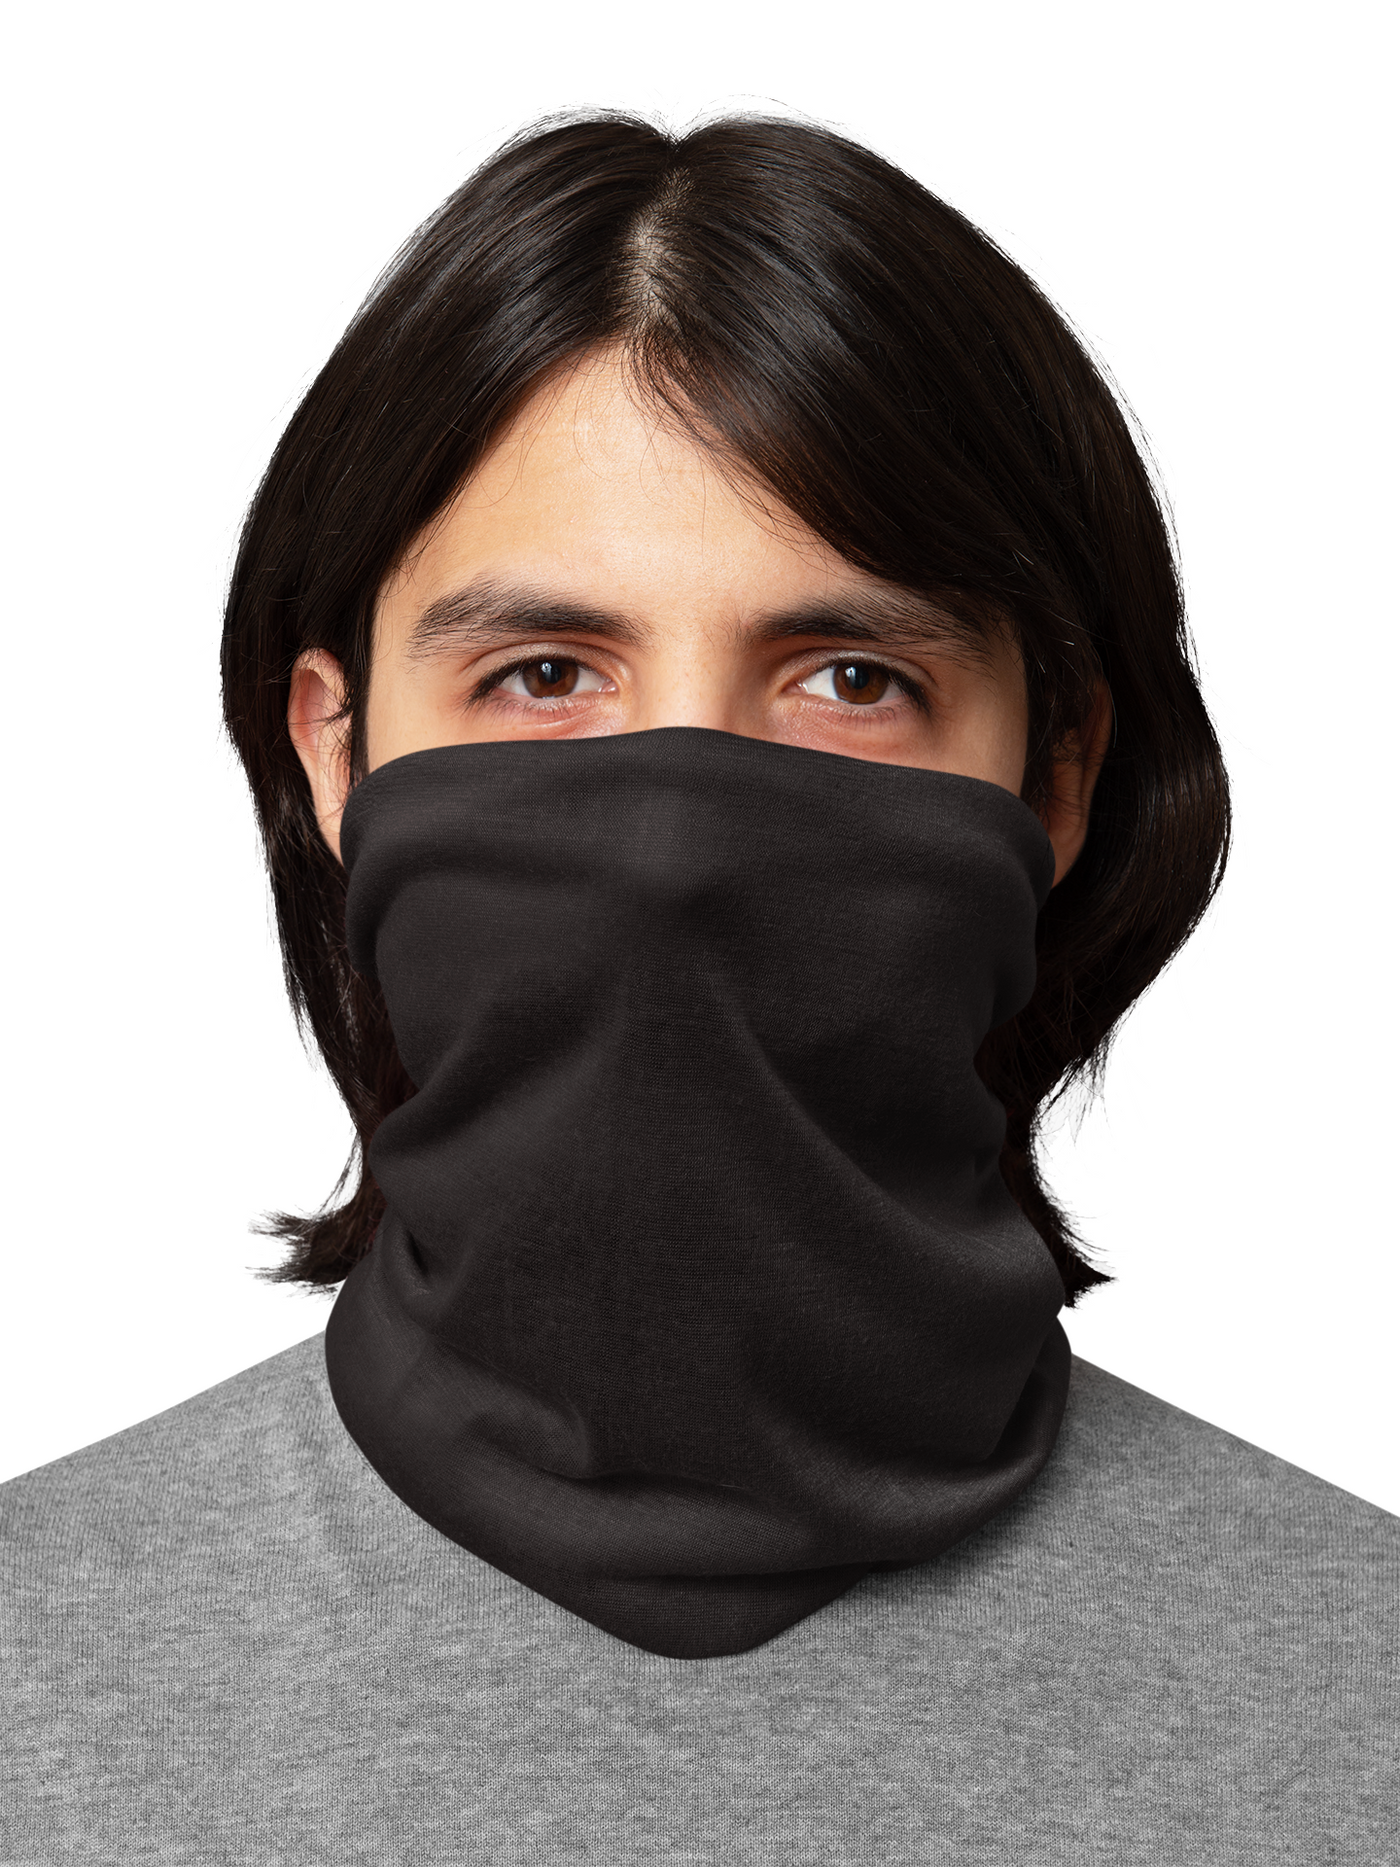 Best Biker Face Bandana  in India online for Men and Women, T shirts, Face Masks,unisex neck gaiters 